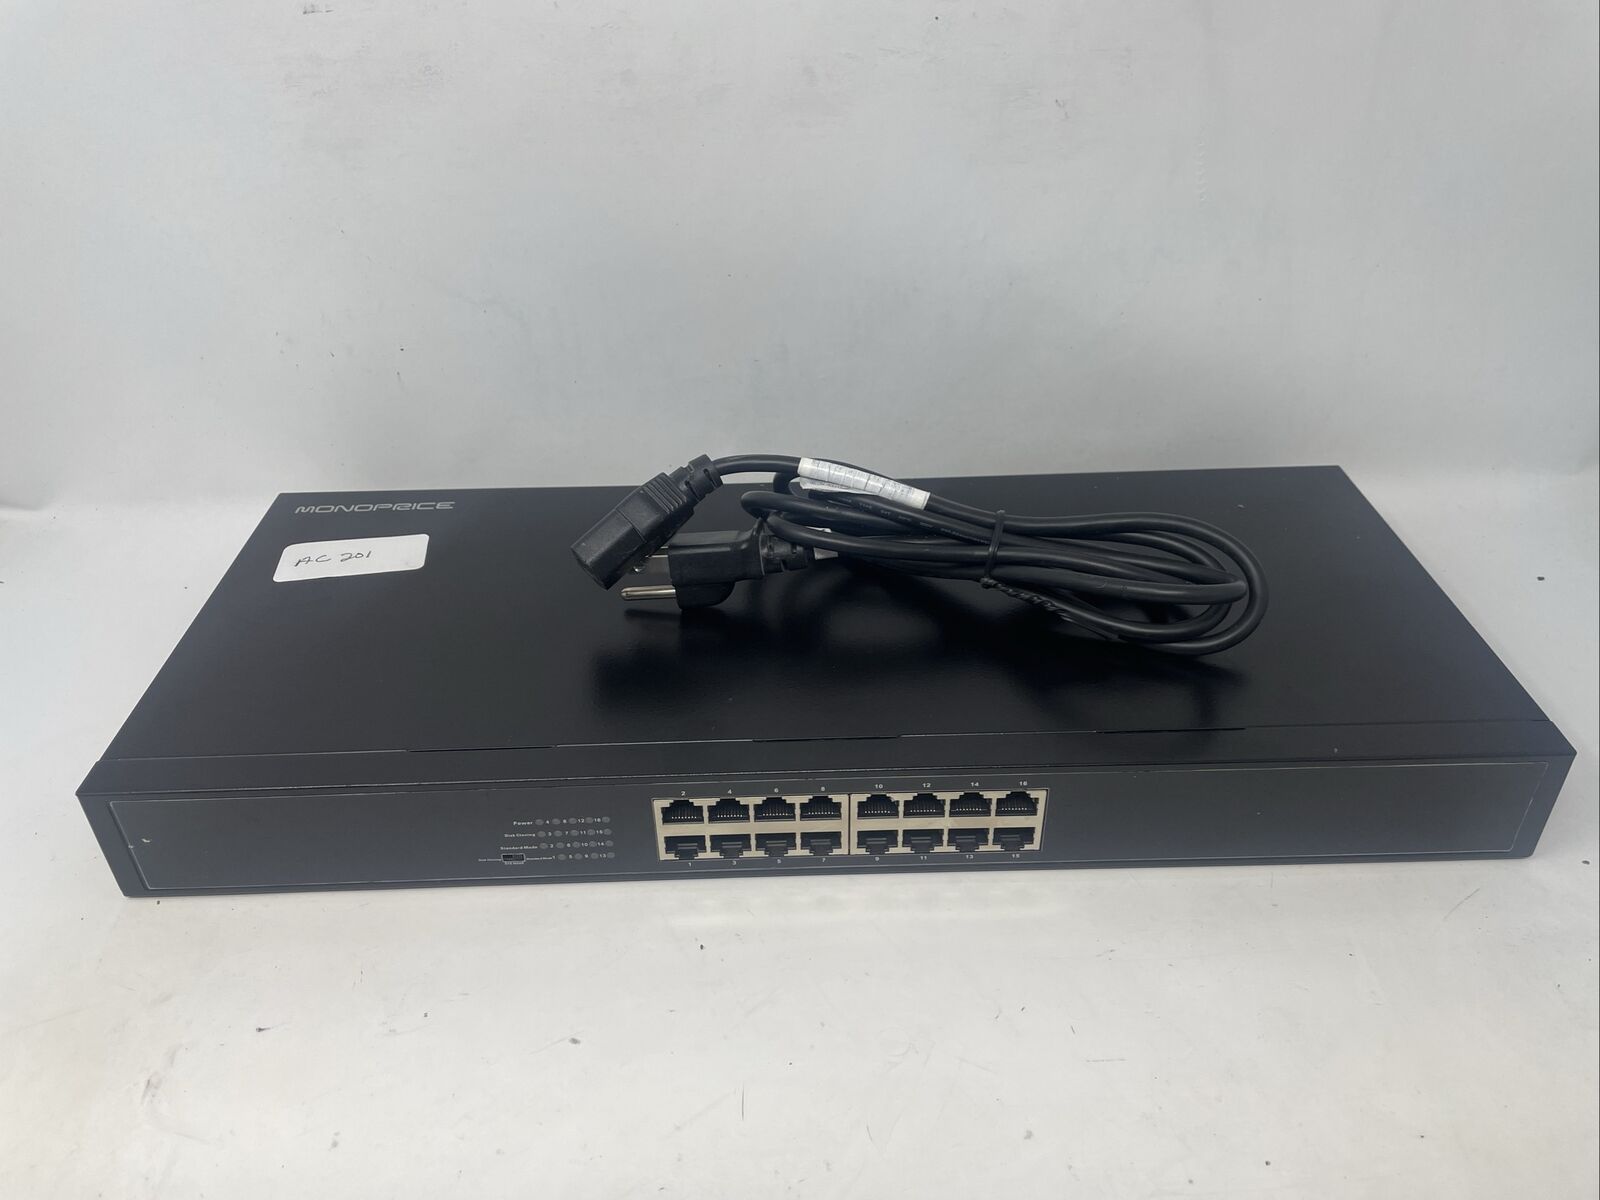 Monoprice 16 Port Unmanaged 10/100/1000 Mbps Gigabit Ethernet Switch/Rack Mount.